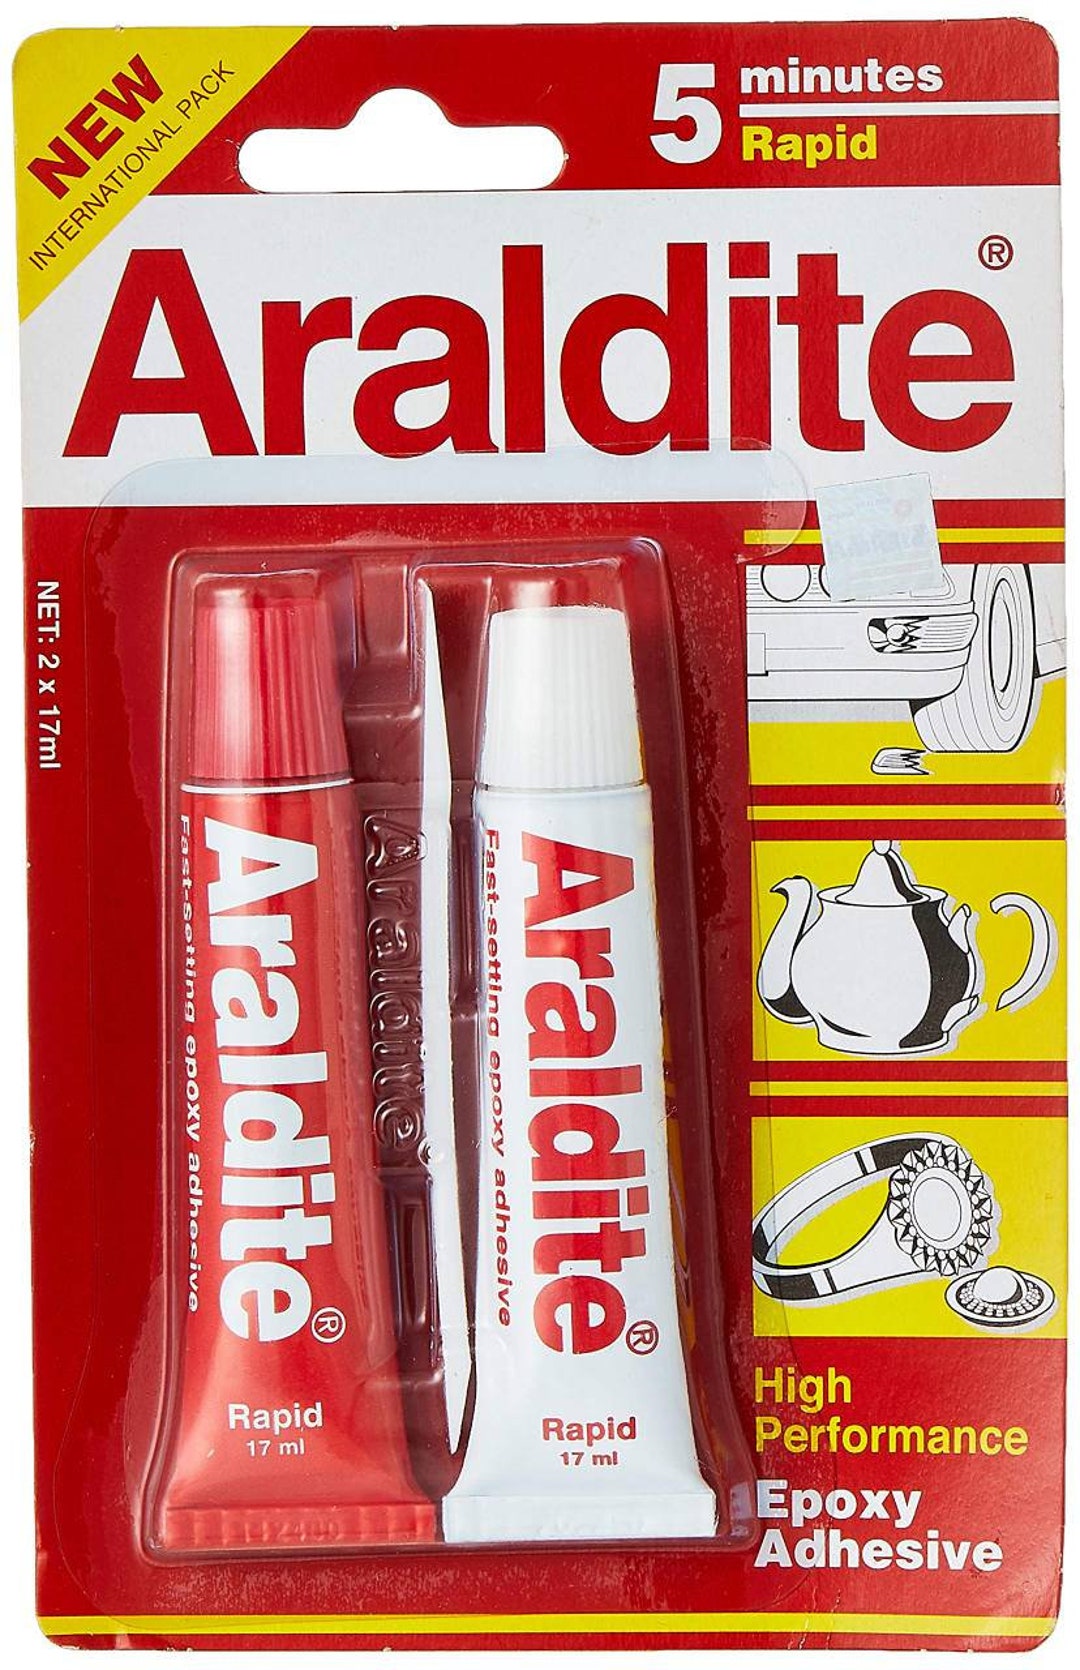 Araldite Standard Epoxy Adhesive 180g Glue Tubes Resin 100g Hardener 80g